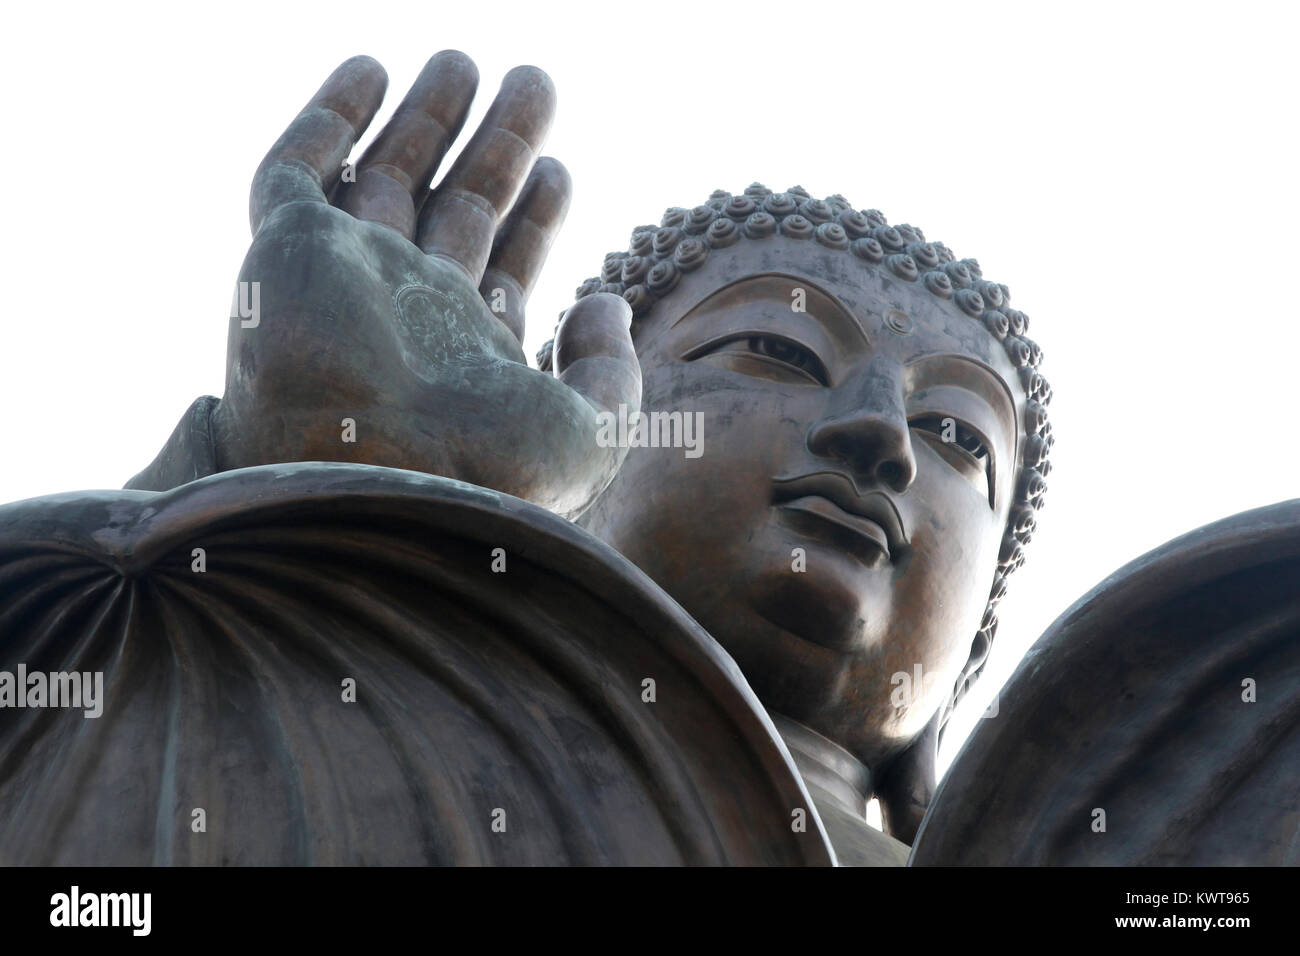 Close up detail of Tian Tan Buddha, or Big Buddha, the tallest outdoor seated bronze Buddha located in Lantau Island, Hong Kong, China. Stock Photo